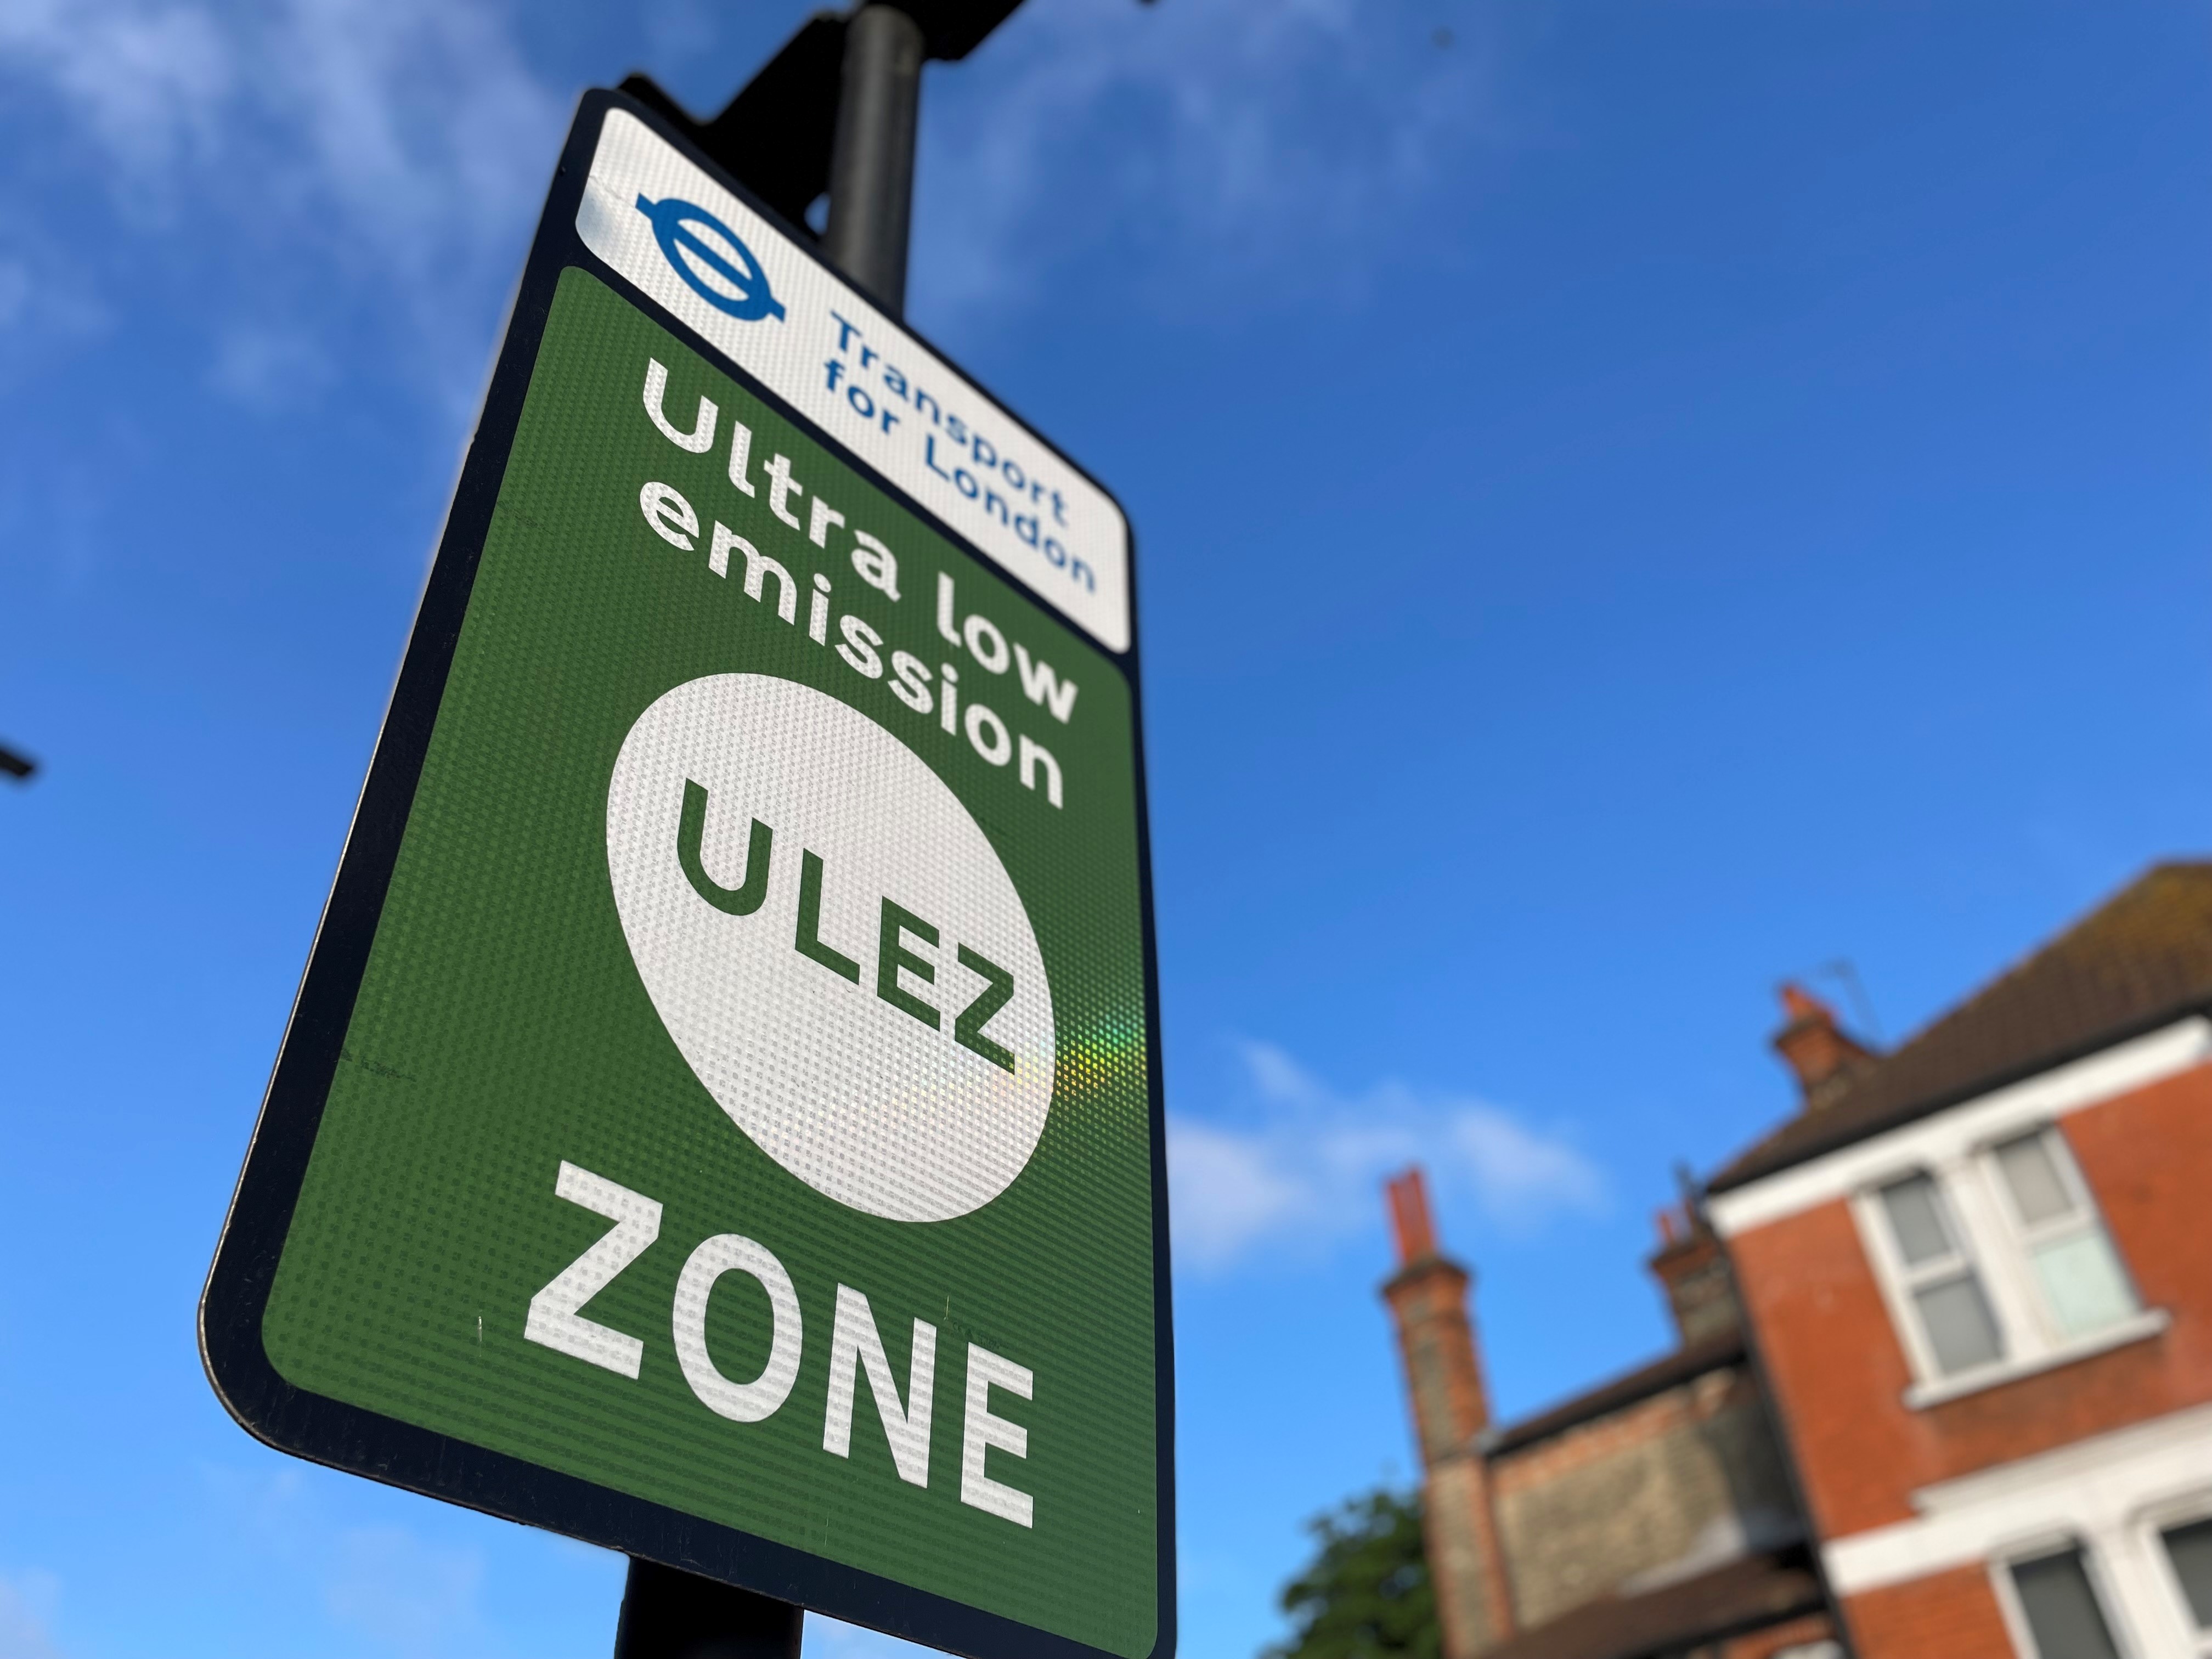 ULEZ public health London air pollution congestion (© ITS International | Adam Hill)